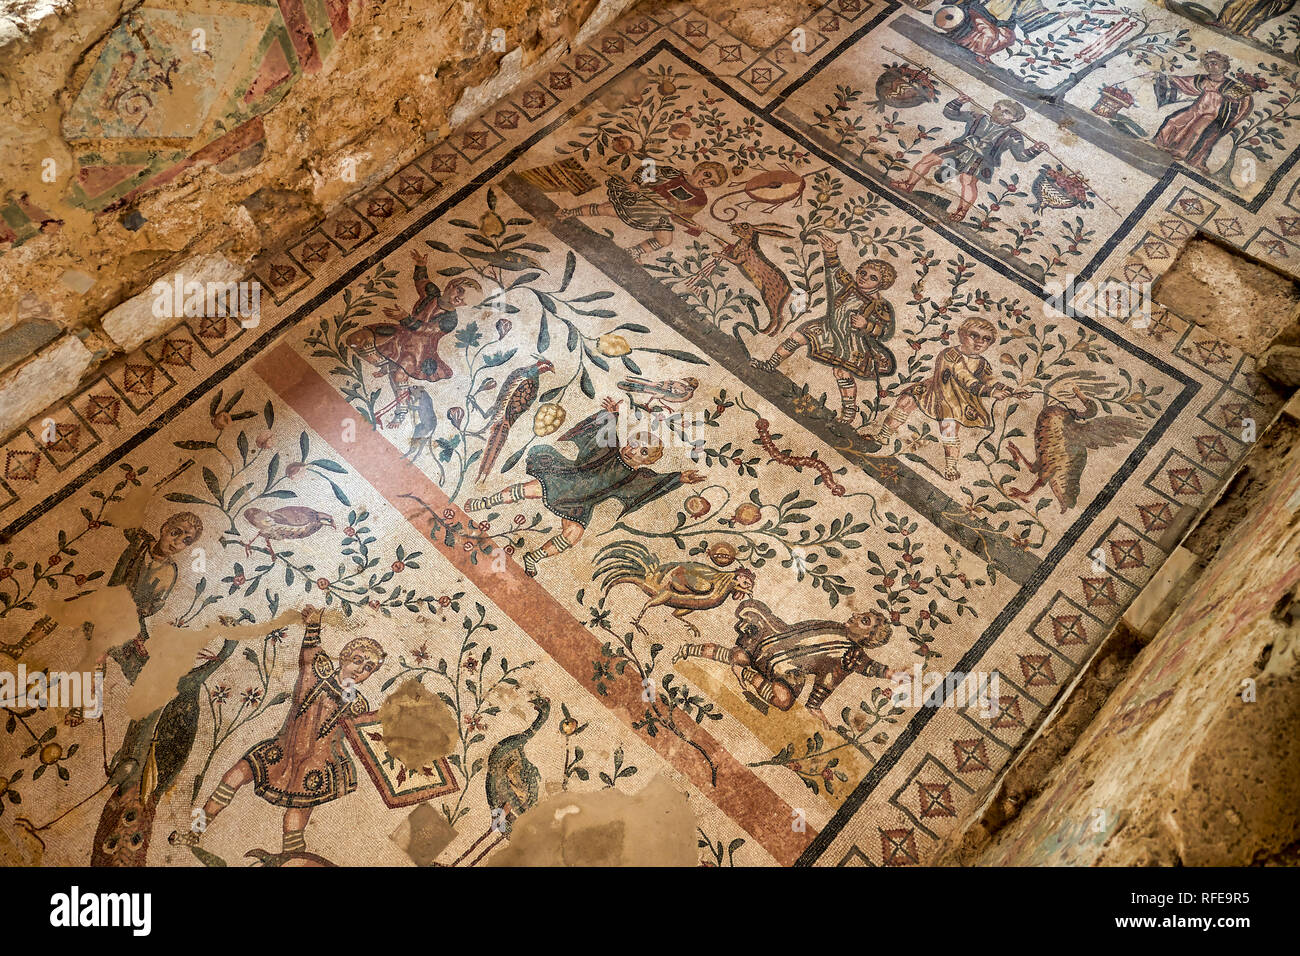 Mosaics at Villa Romana del Casale (Roman Villa) in Piazza Armerina Sicily Italy Stock Photo